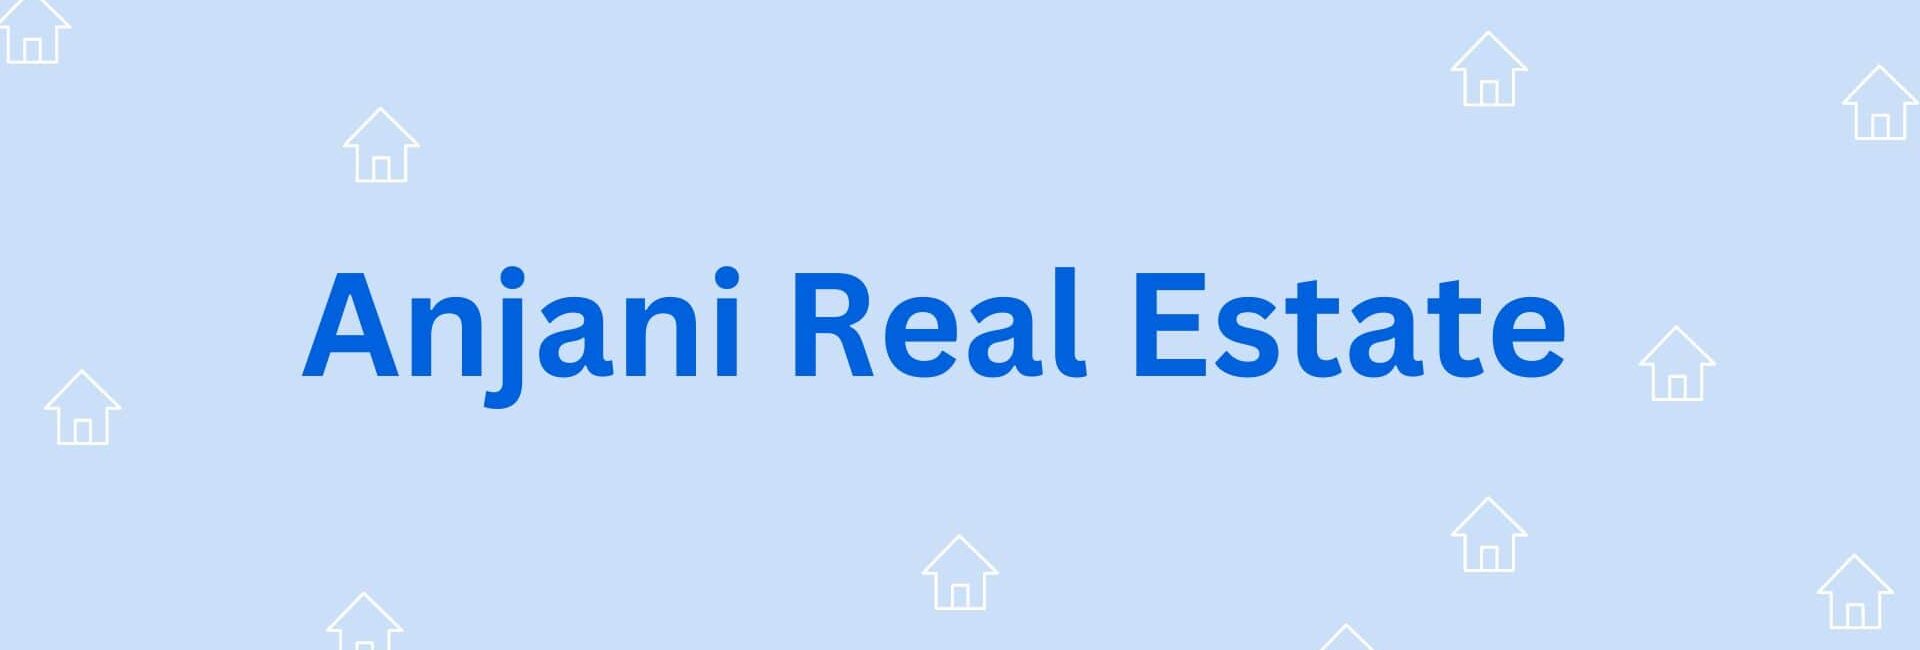 Anjani Real Estate - Property Dealer in Hisar